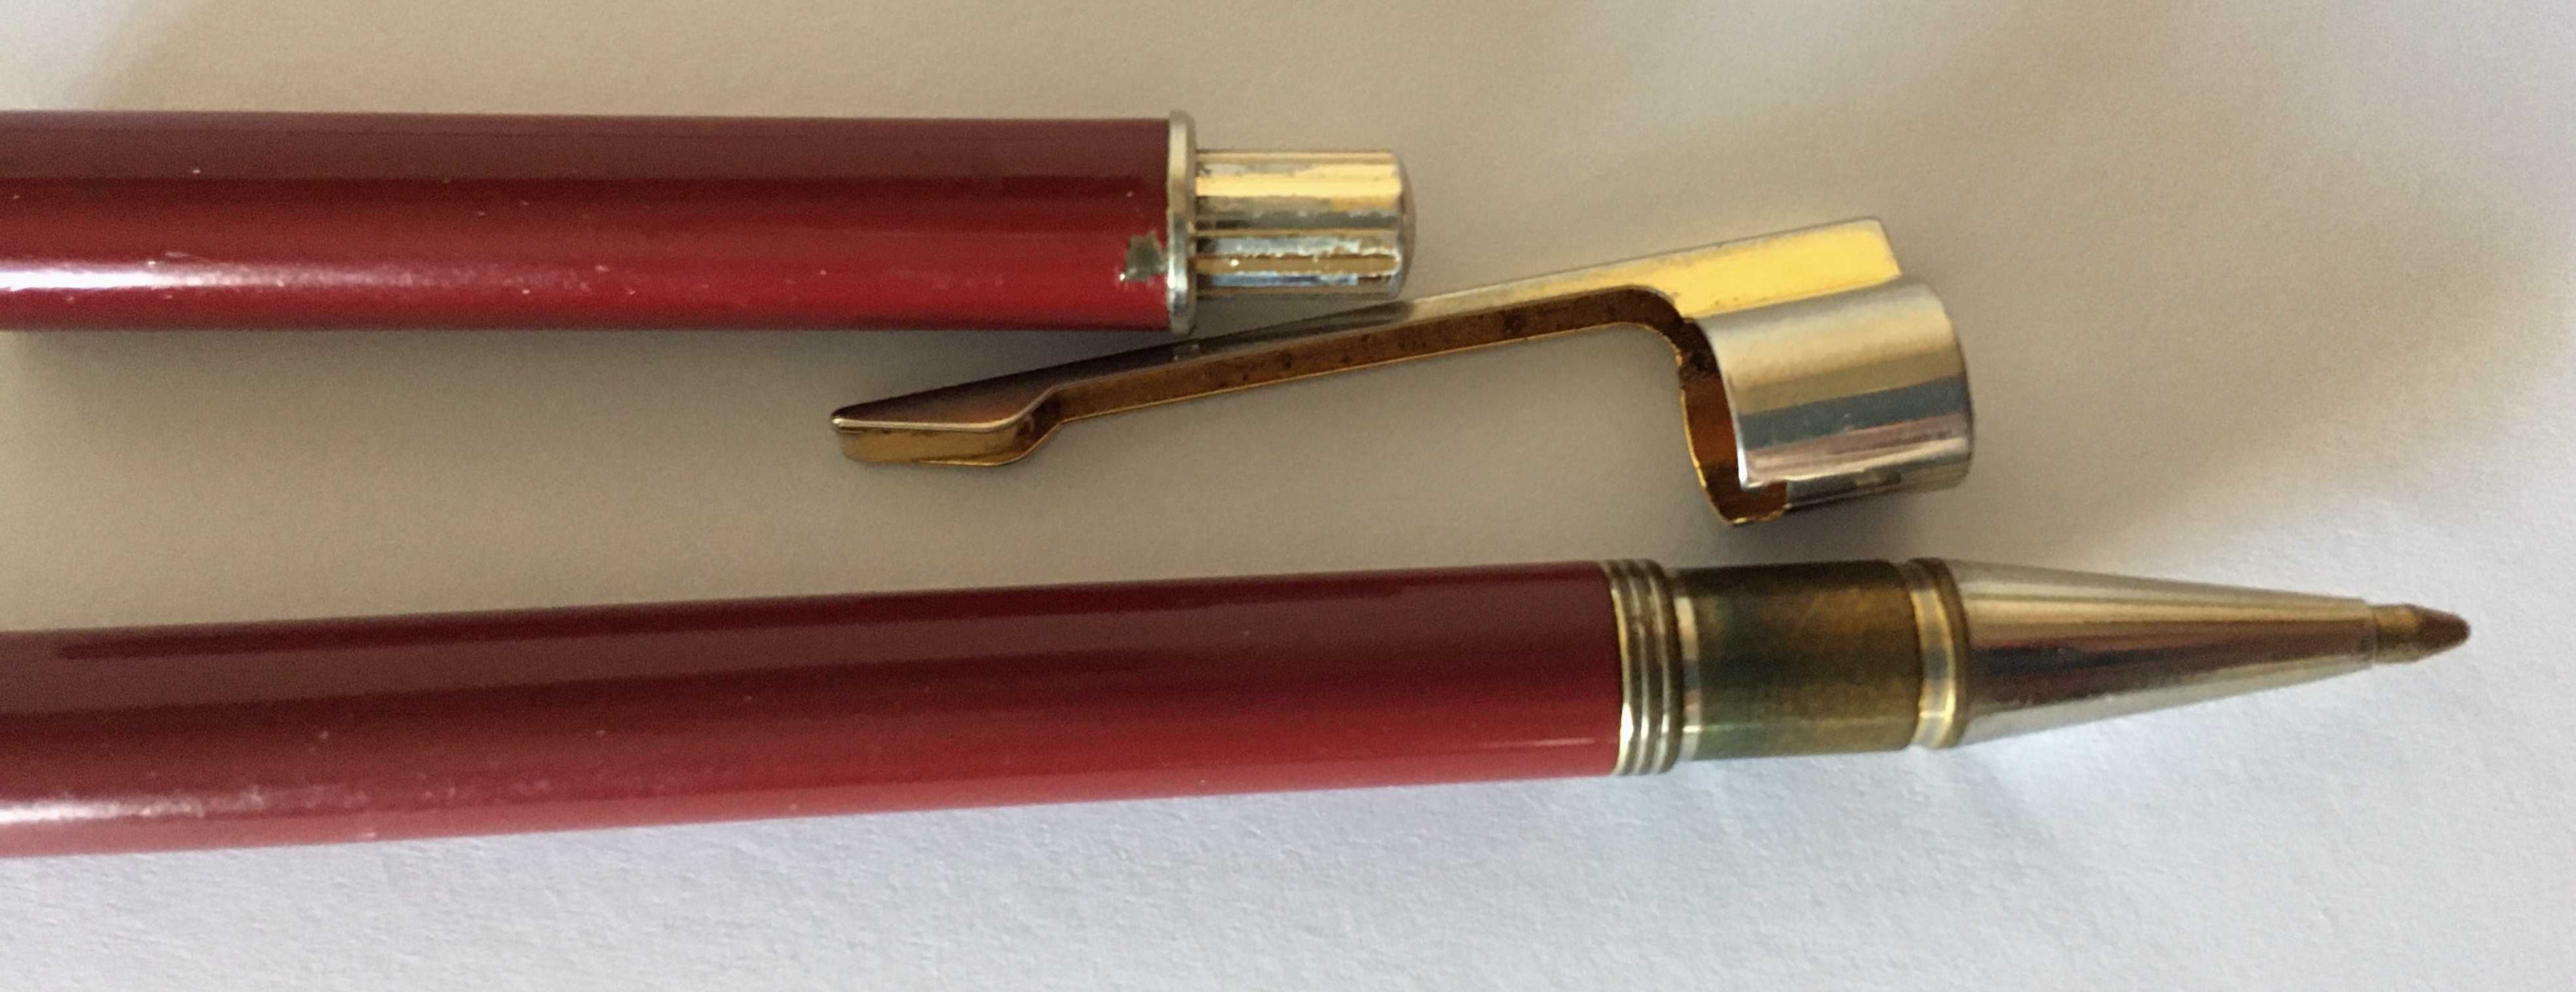 Creion mecanic din metal si pix vintage 2 in 1